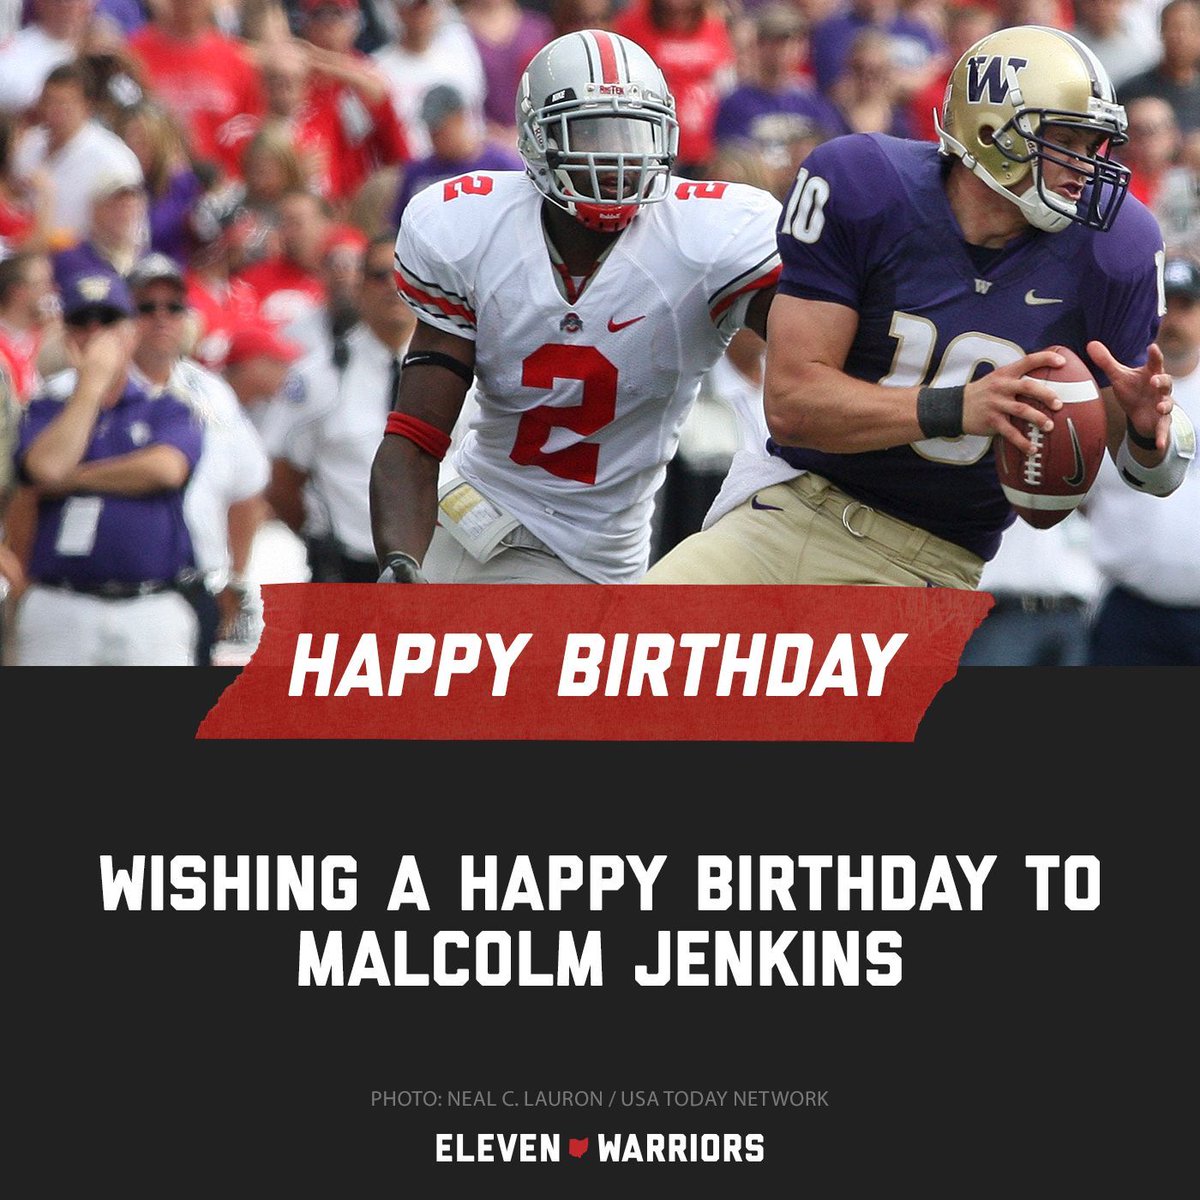 Wishing a happy birthday to @MalcolmJenkins!